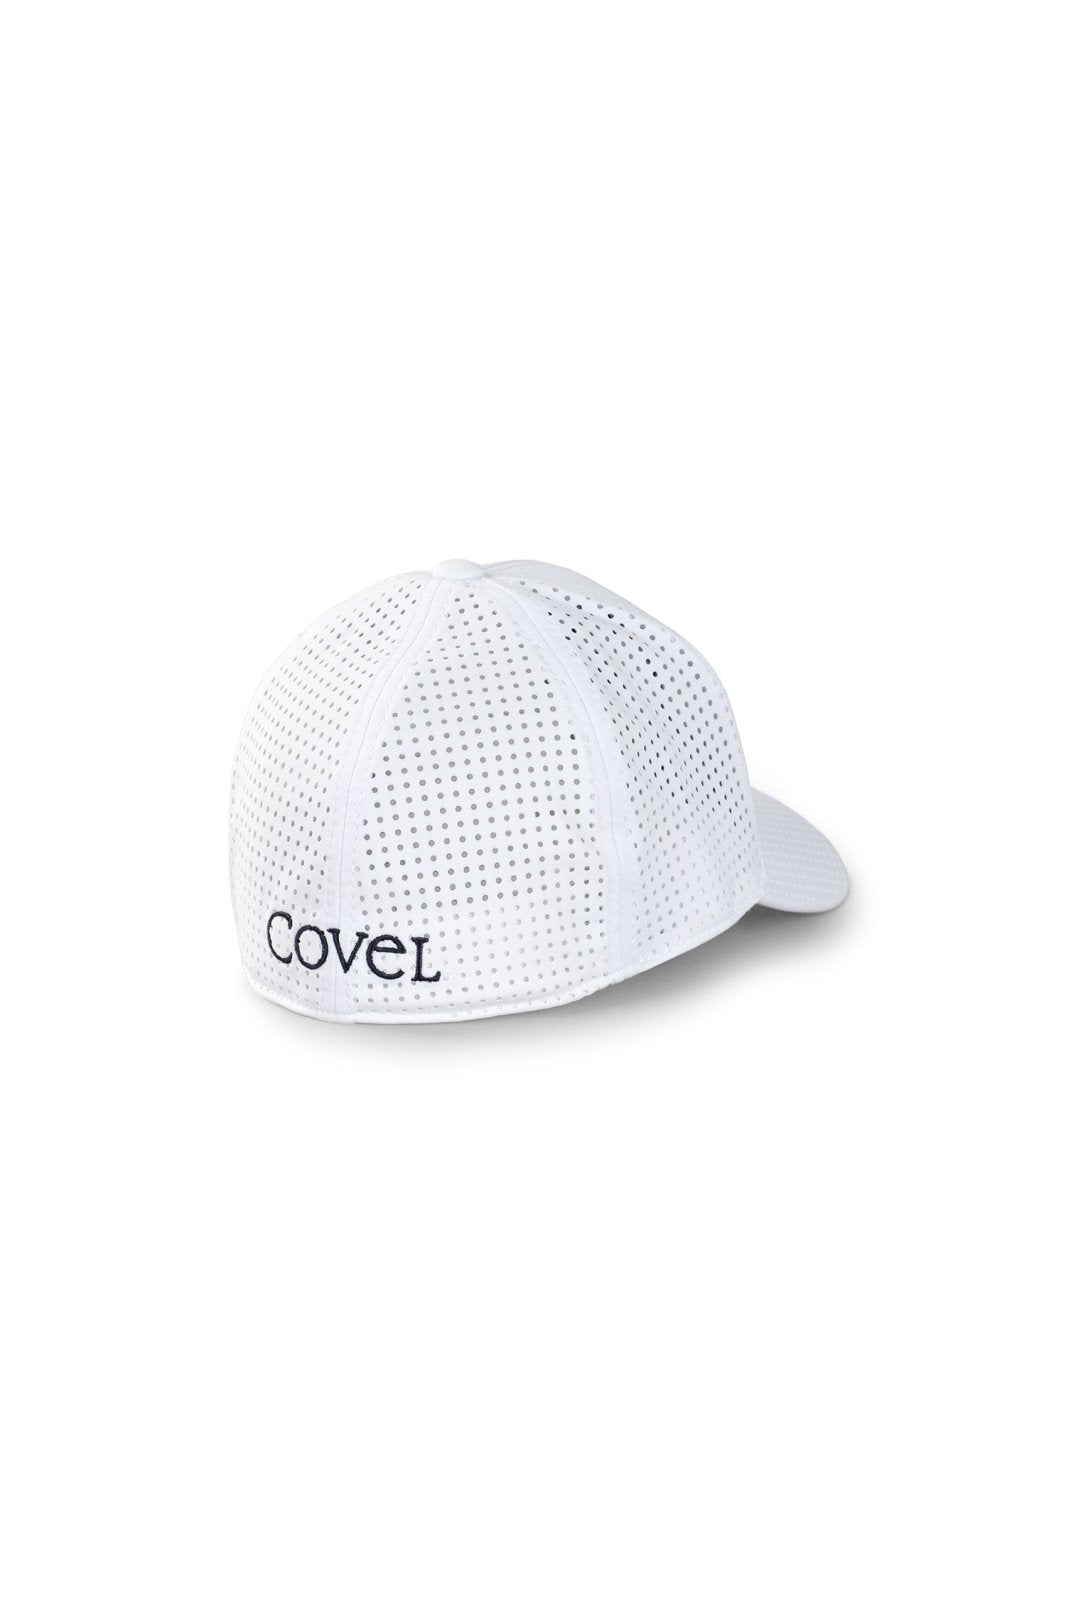 Covel Logo White Hat With Memory Foam Band by SwingDish